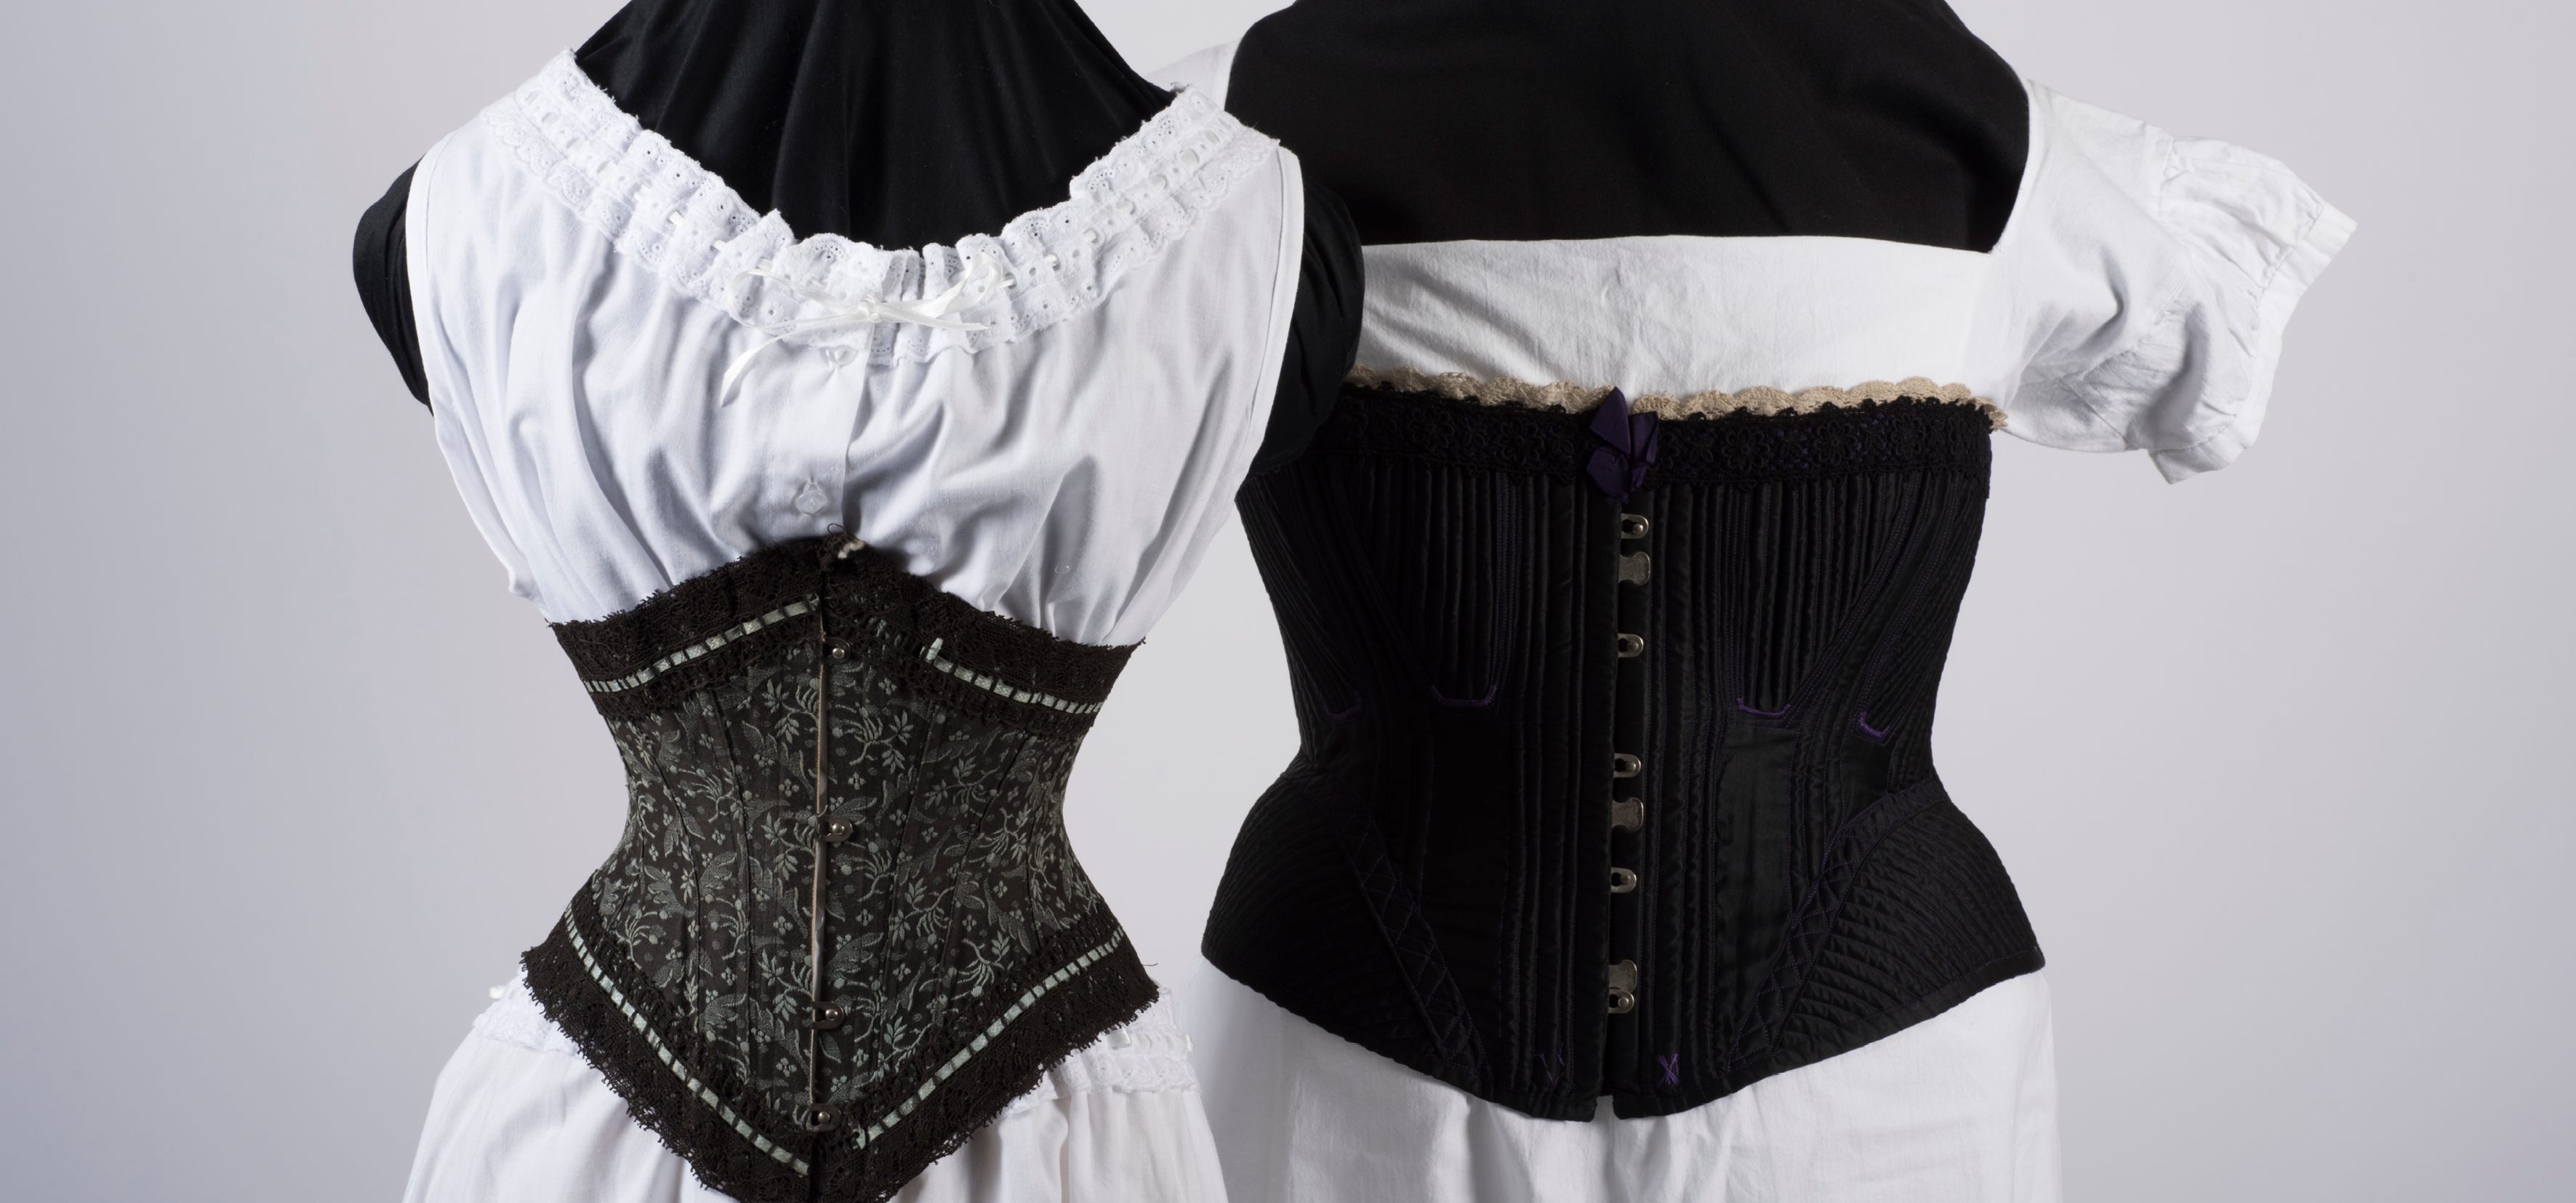 https://www.yorkmuseumstrust.org.uk/wp-content/uploads/2021/04/corsets.png